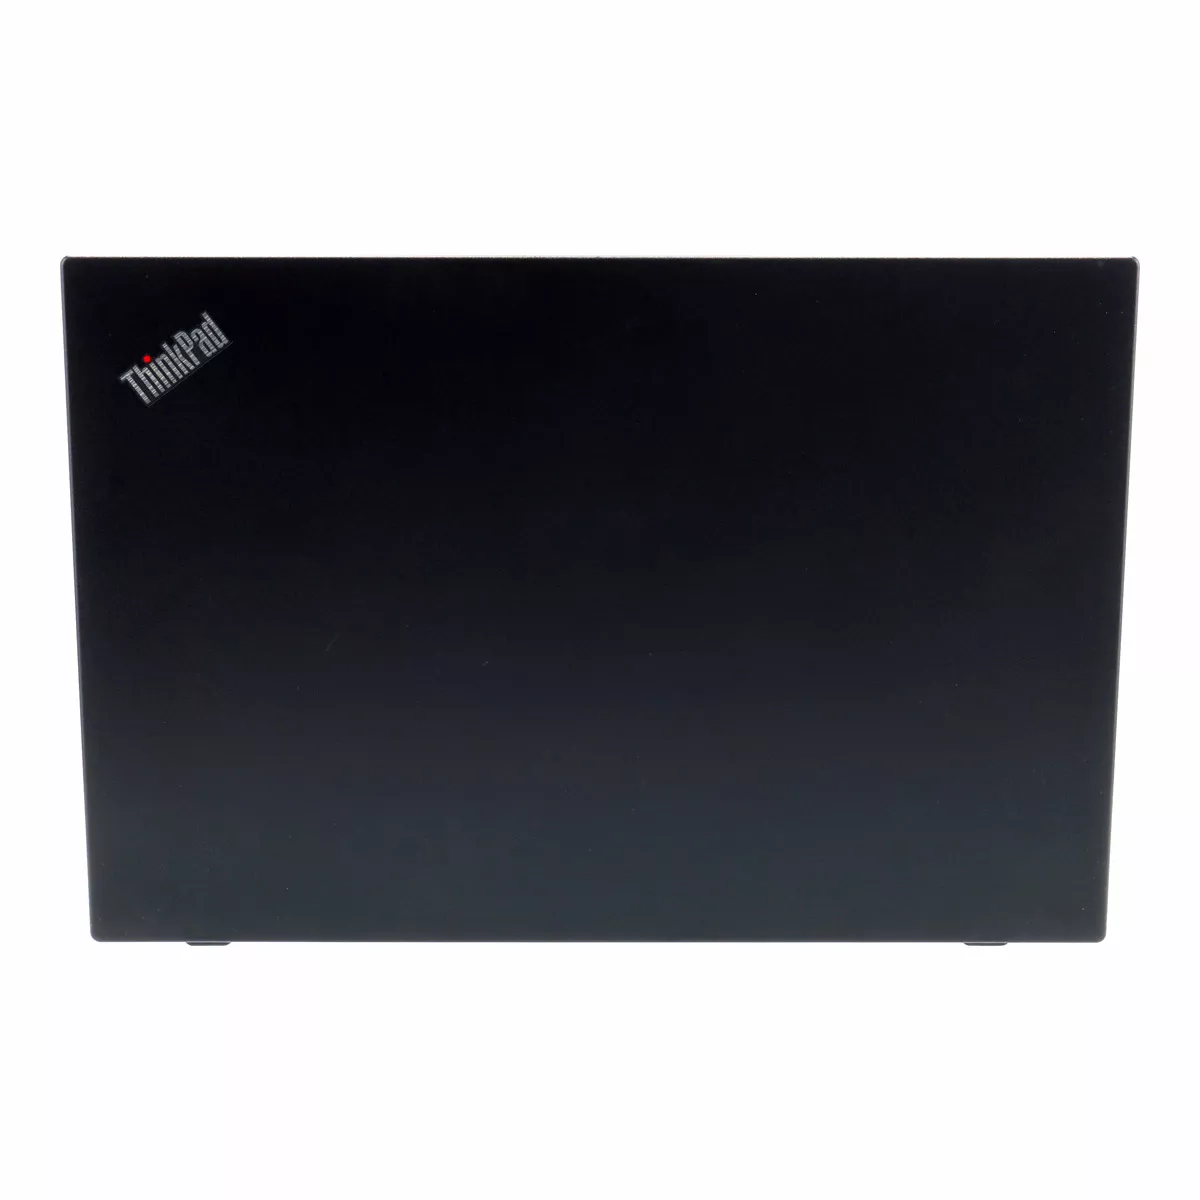 Lenovo ThinkPad L580 Core i5 8350U Full-HD 240 GB M.2 nVME SSD Webcam B